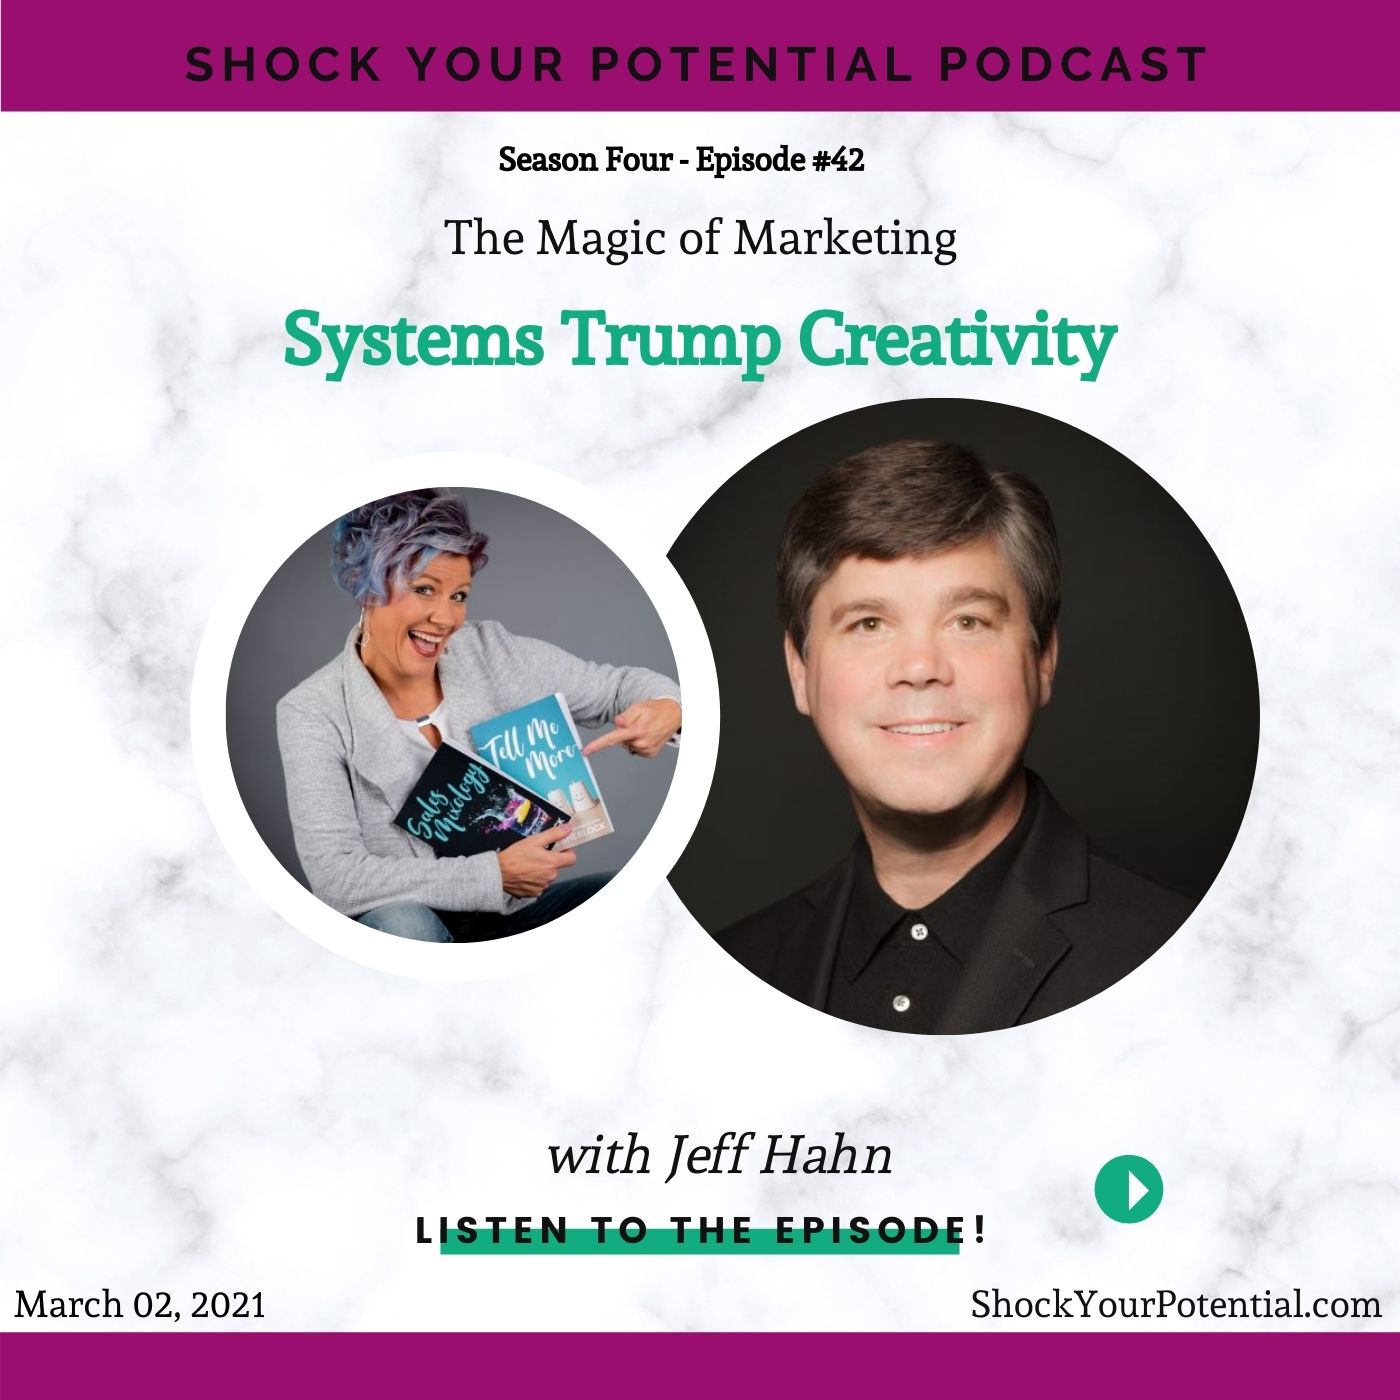 Systems Trump Creativity – Jeff Hahn